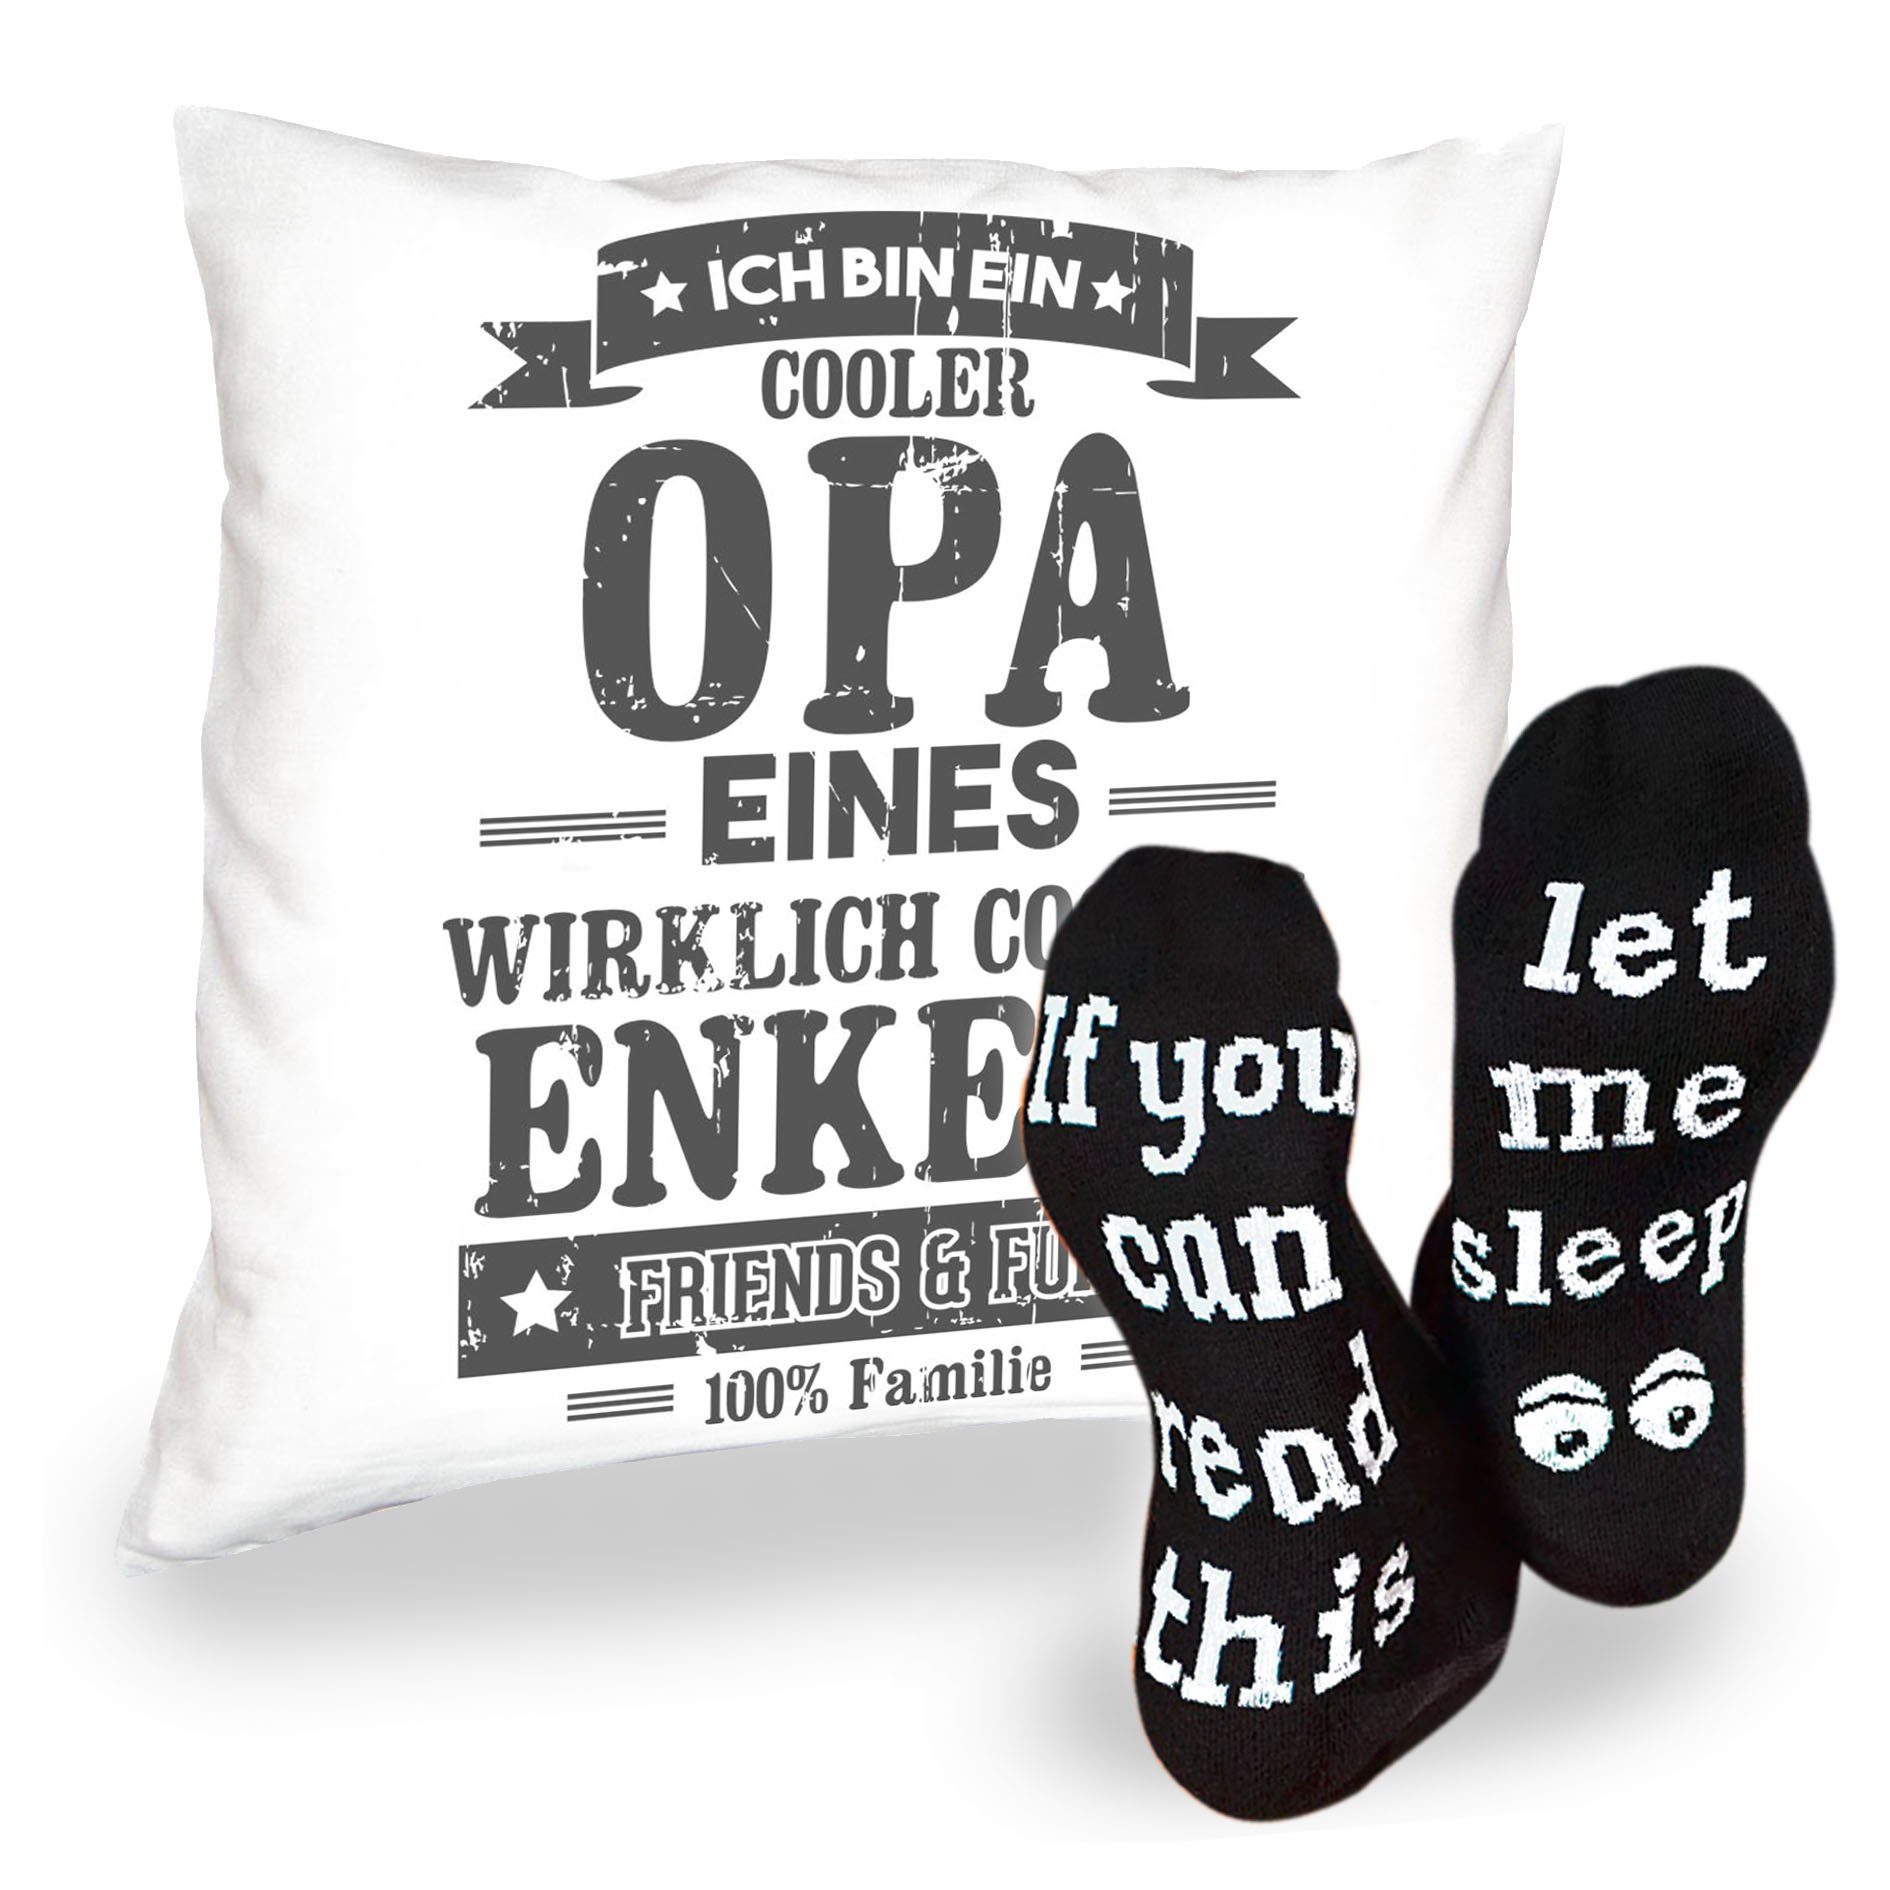 Socken eines Geburtstagsgeschenk Dekokissen & Cooler Enkels weiss Opa Soreso® Kissen Geschenk Sleep, Sprüche